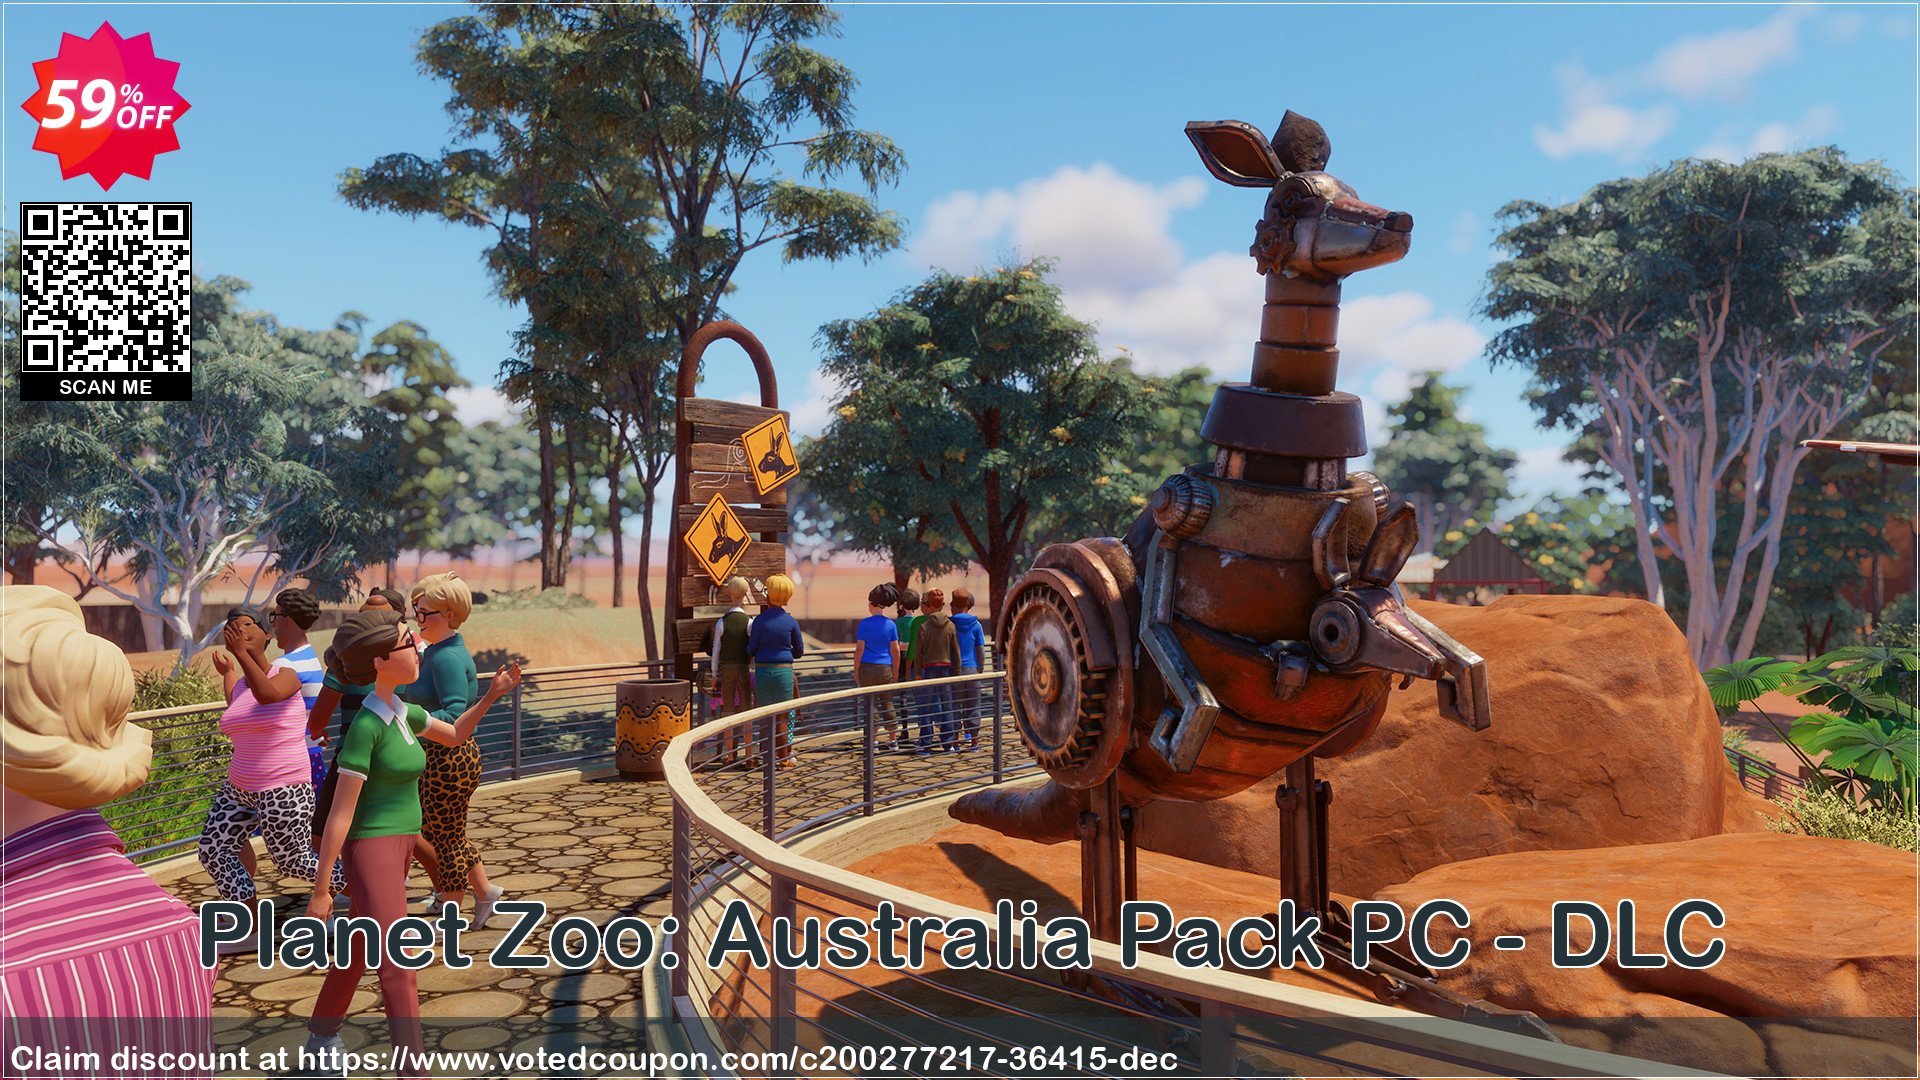 Planet Zoo: Australia Pack PC - DLC Coupon Code Apr 2024, 59% OFF - VotedCoupon